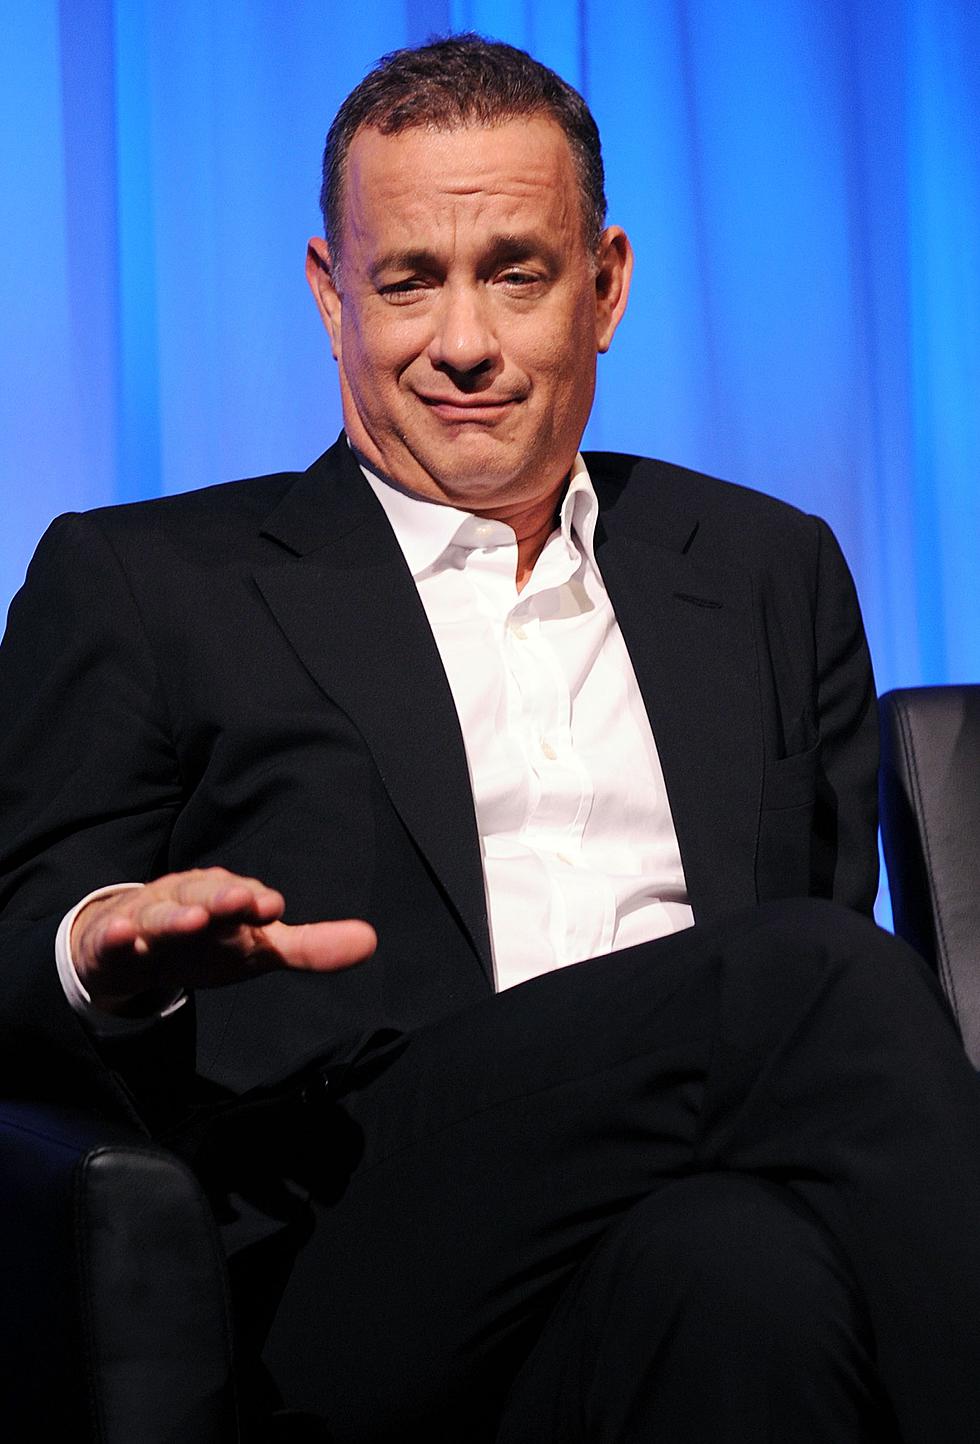 Tom Hanks Has Diabetes